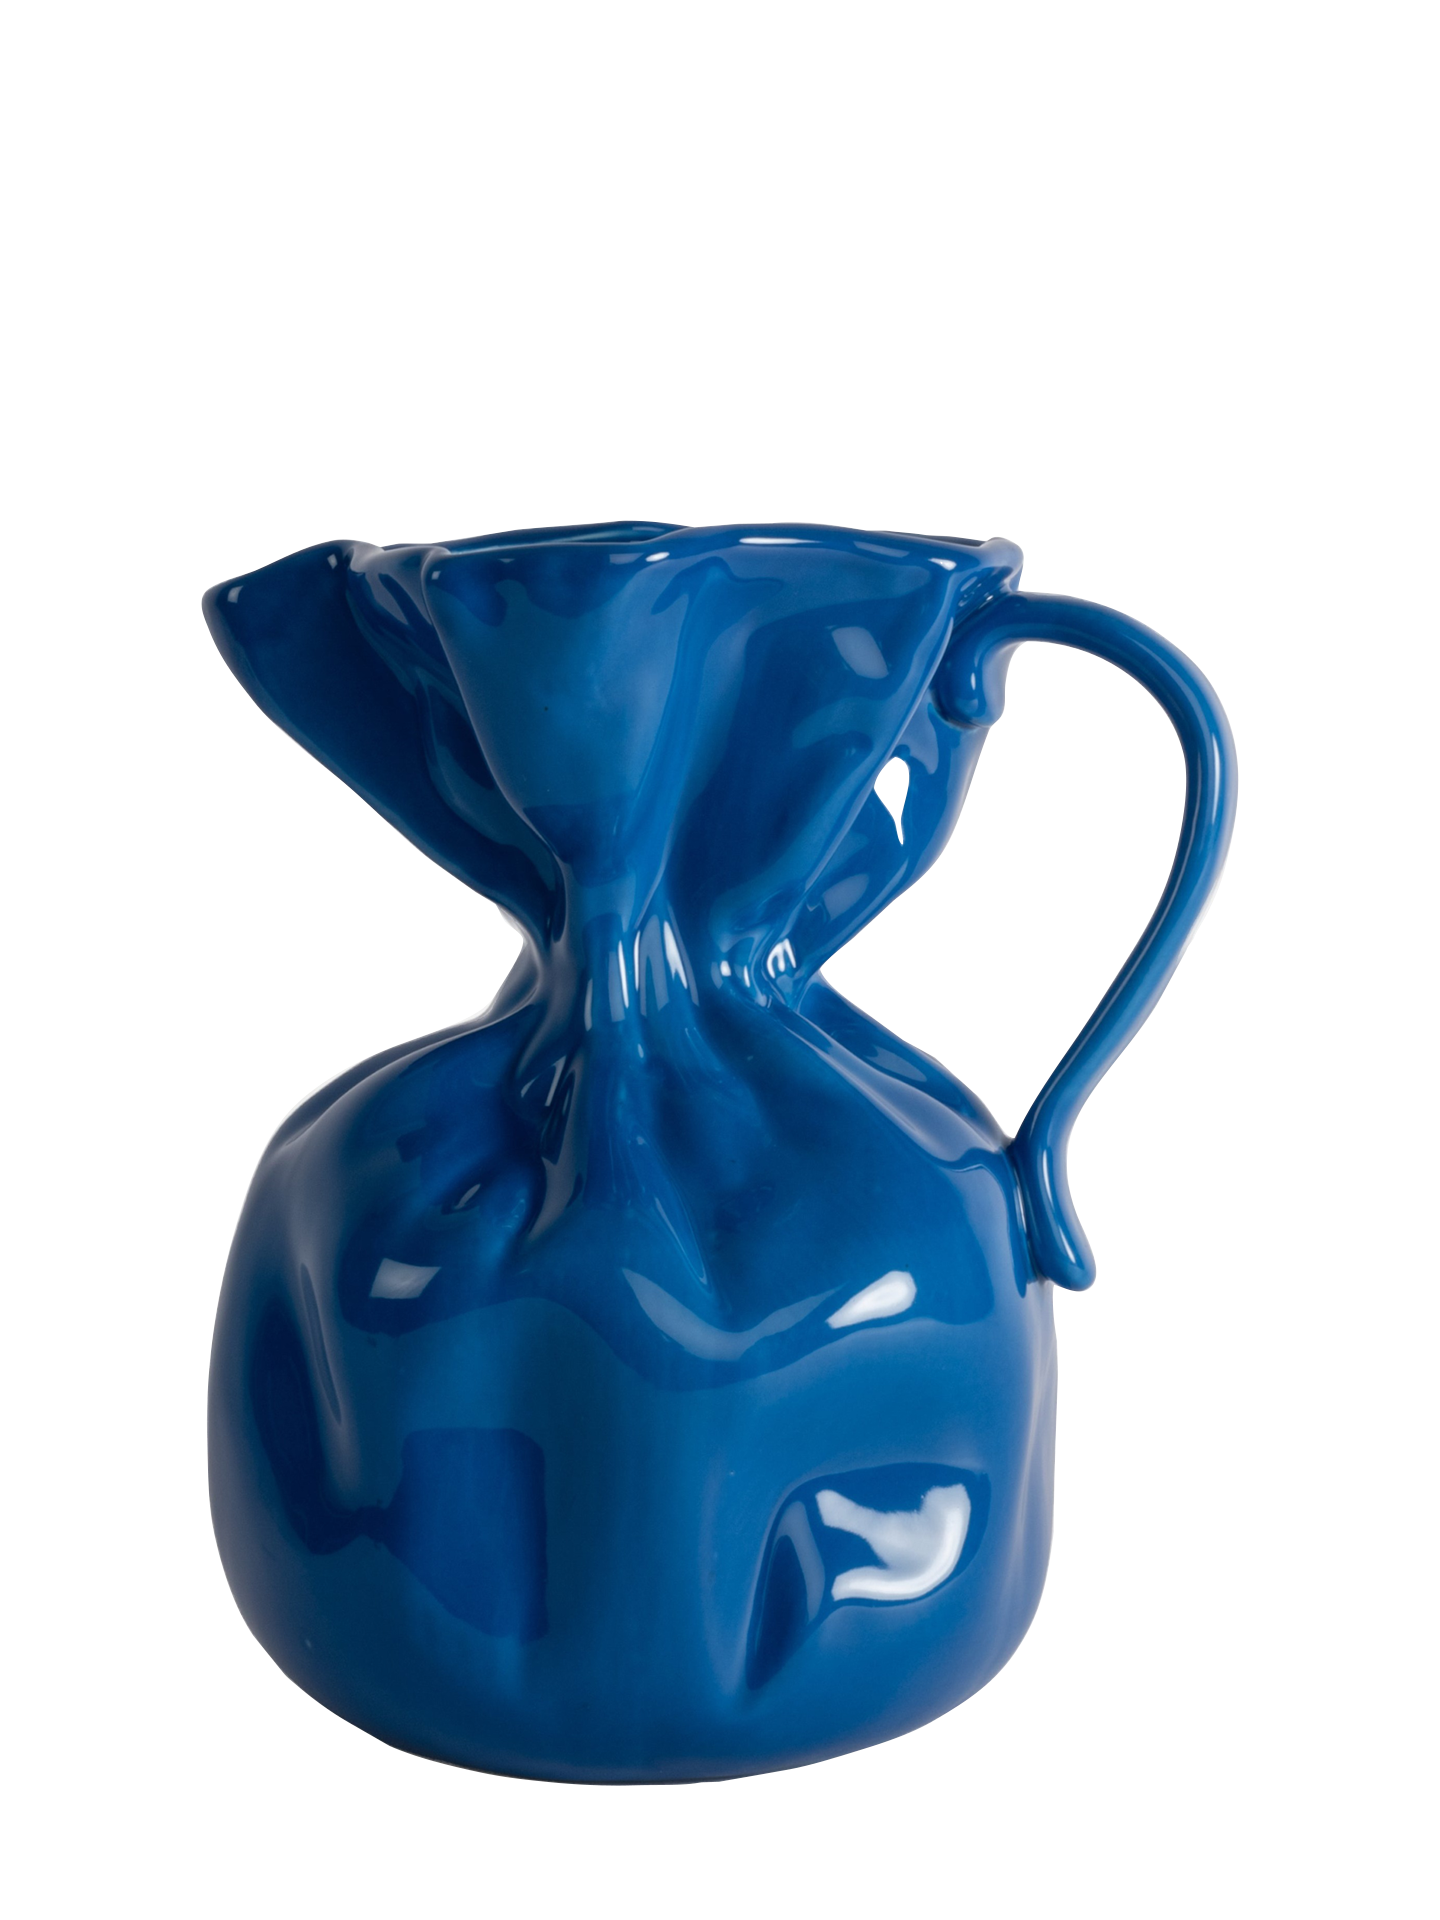 Crumple vase, white or blue